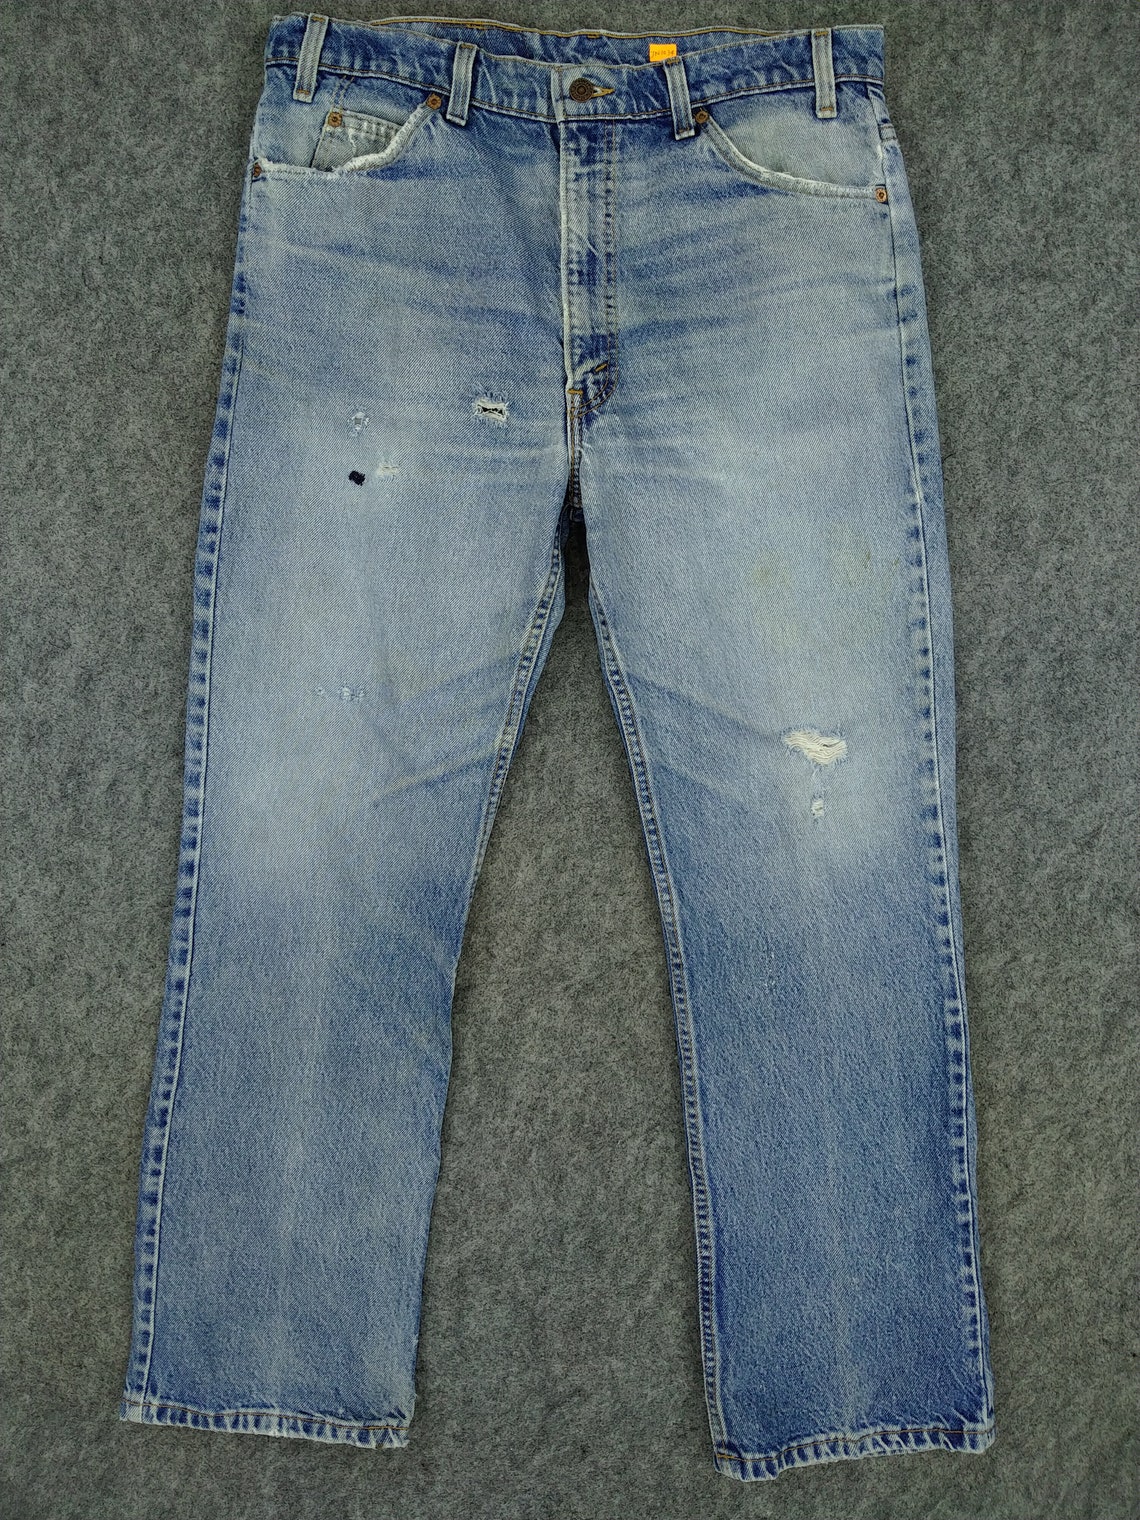 Vintage Levi's 517 Orange Tab Jeans 35x29 Light Wash Denim | Etsy